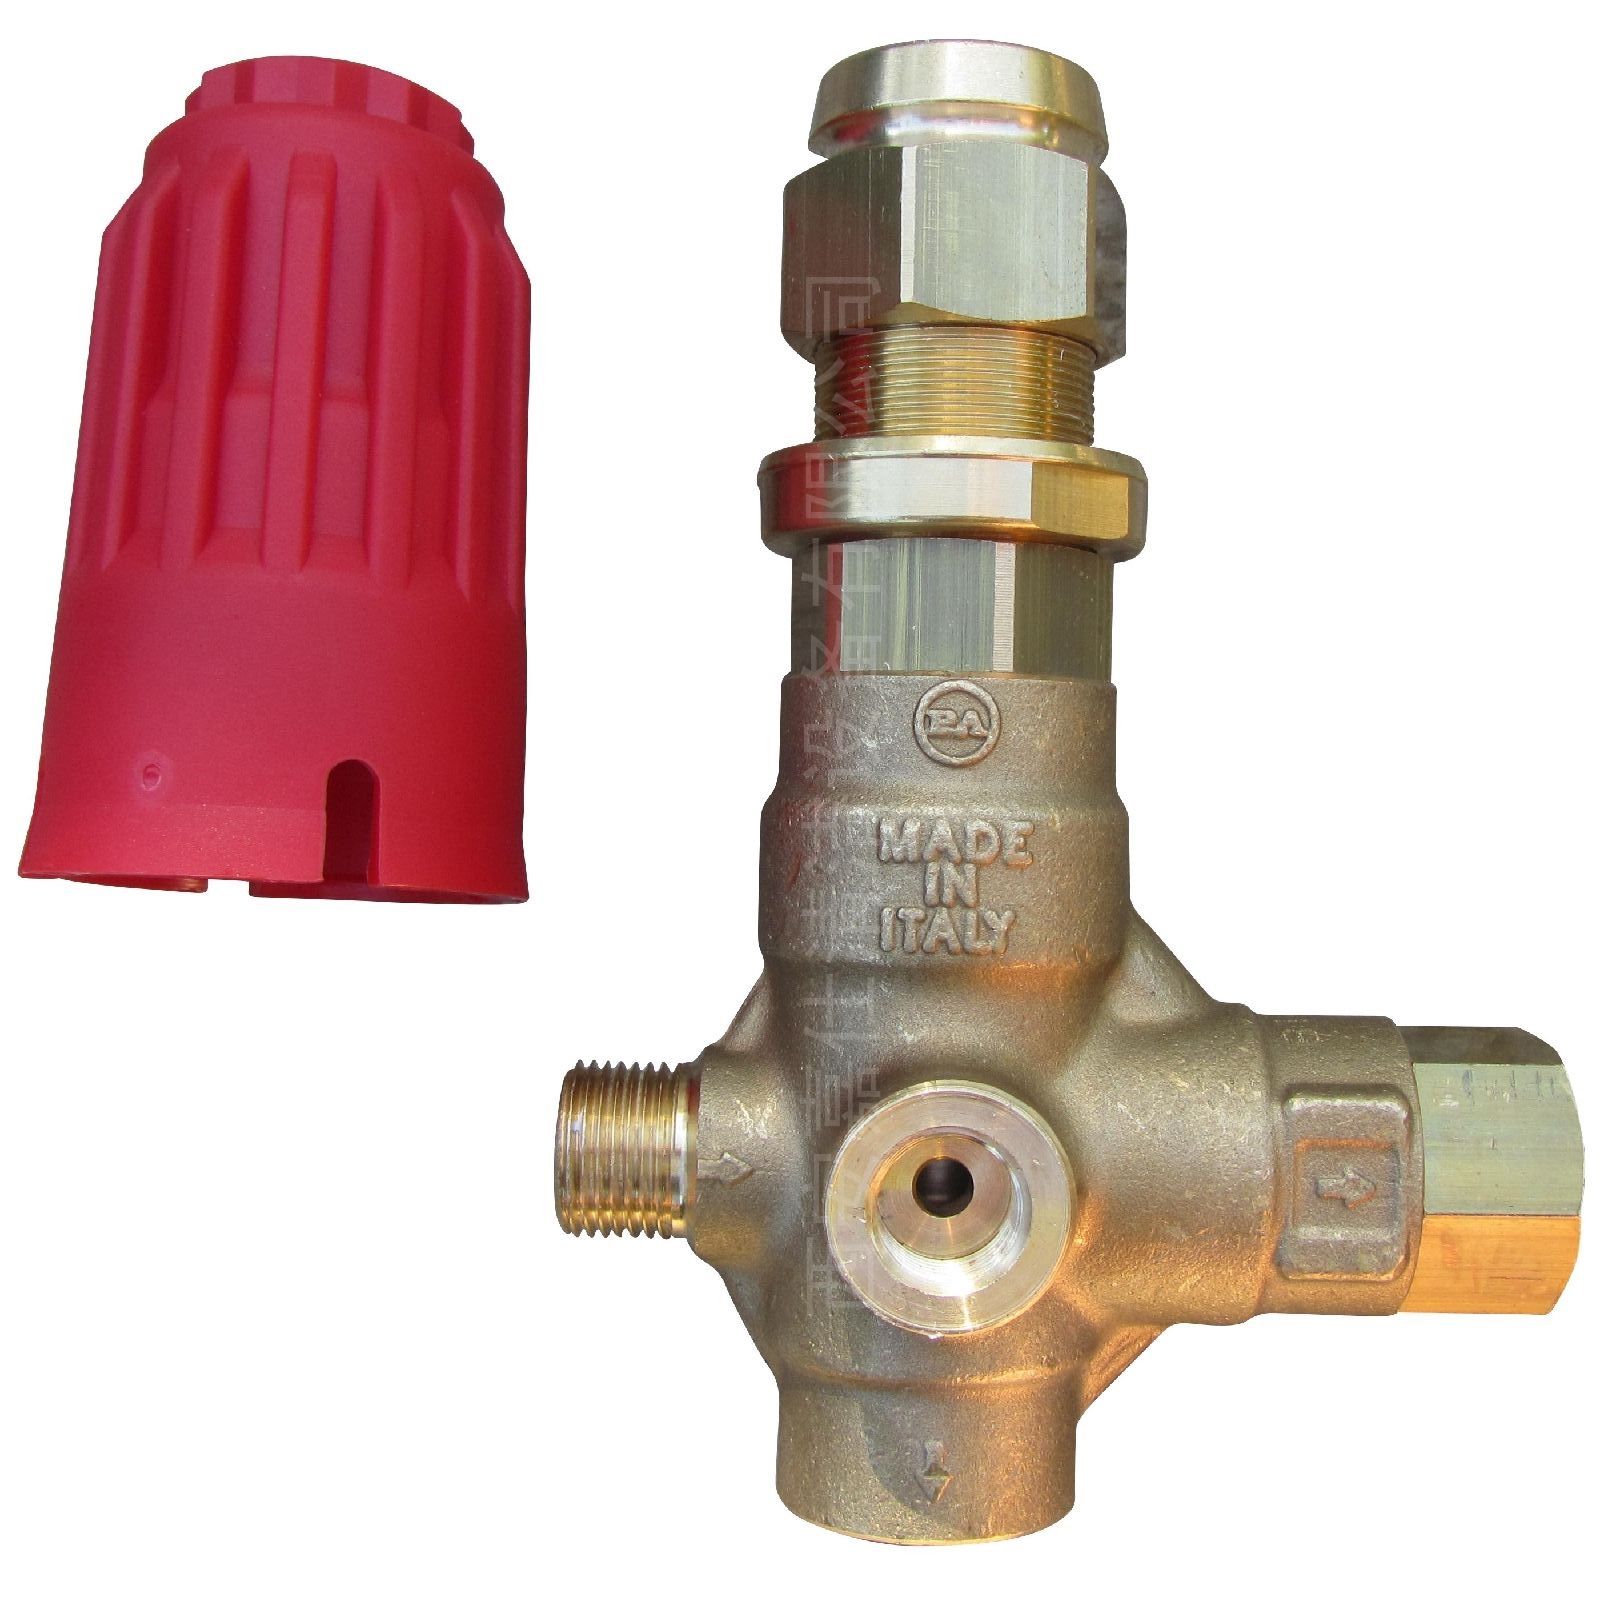 PAѹ VB350 unloader valve with knob